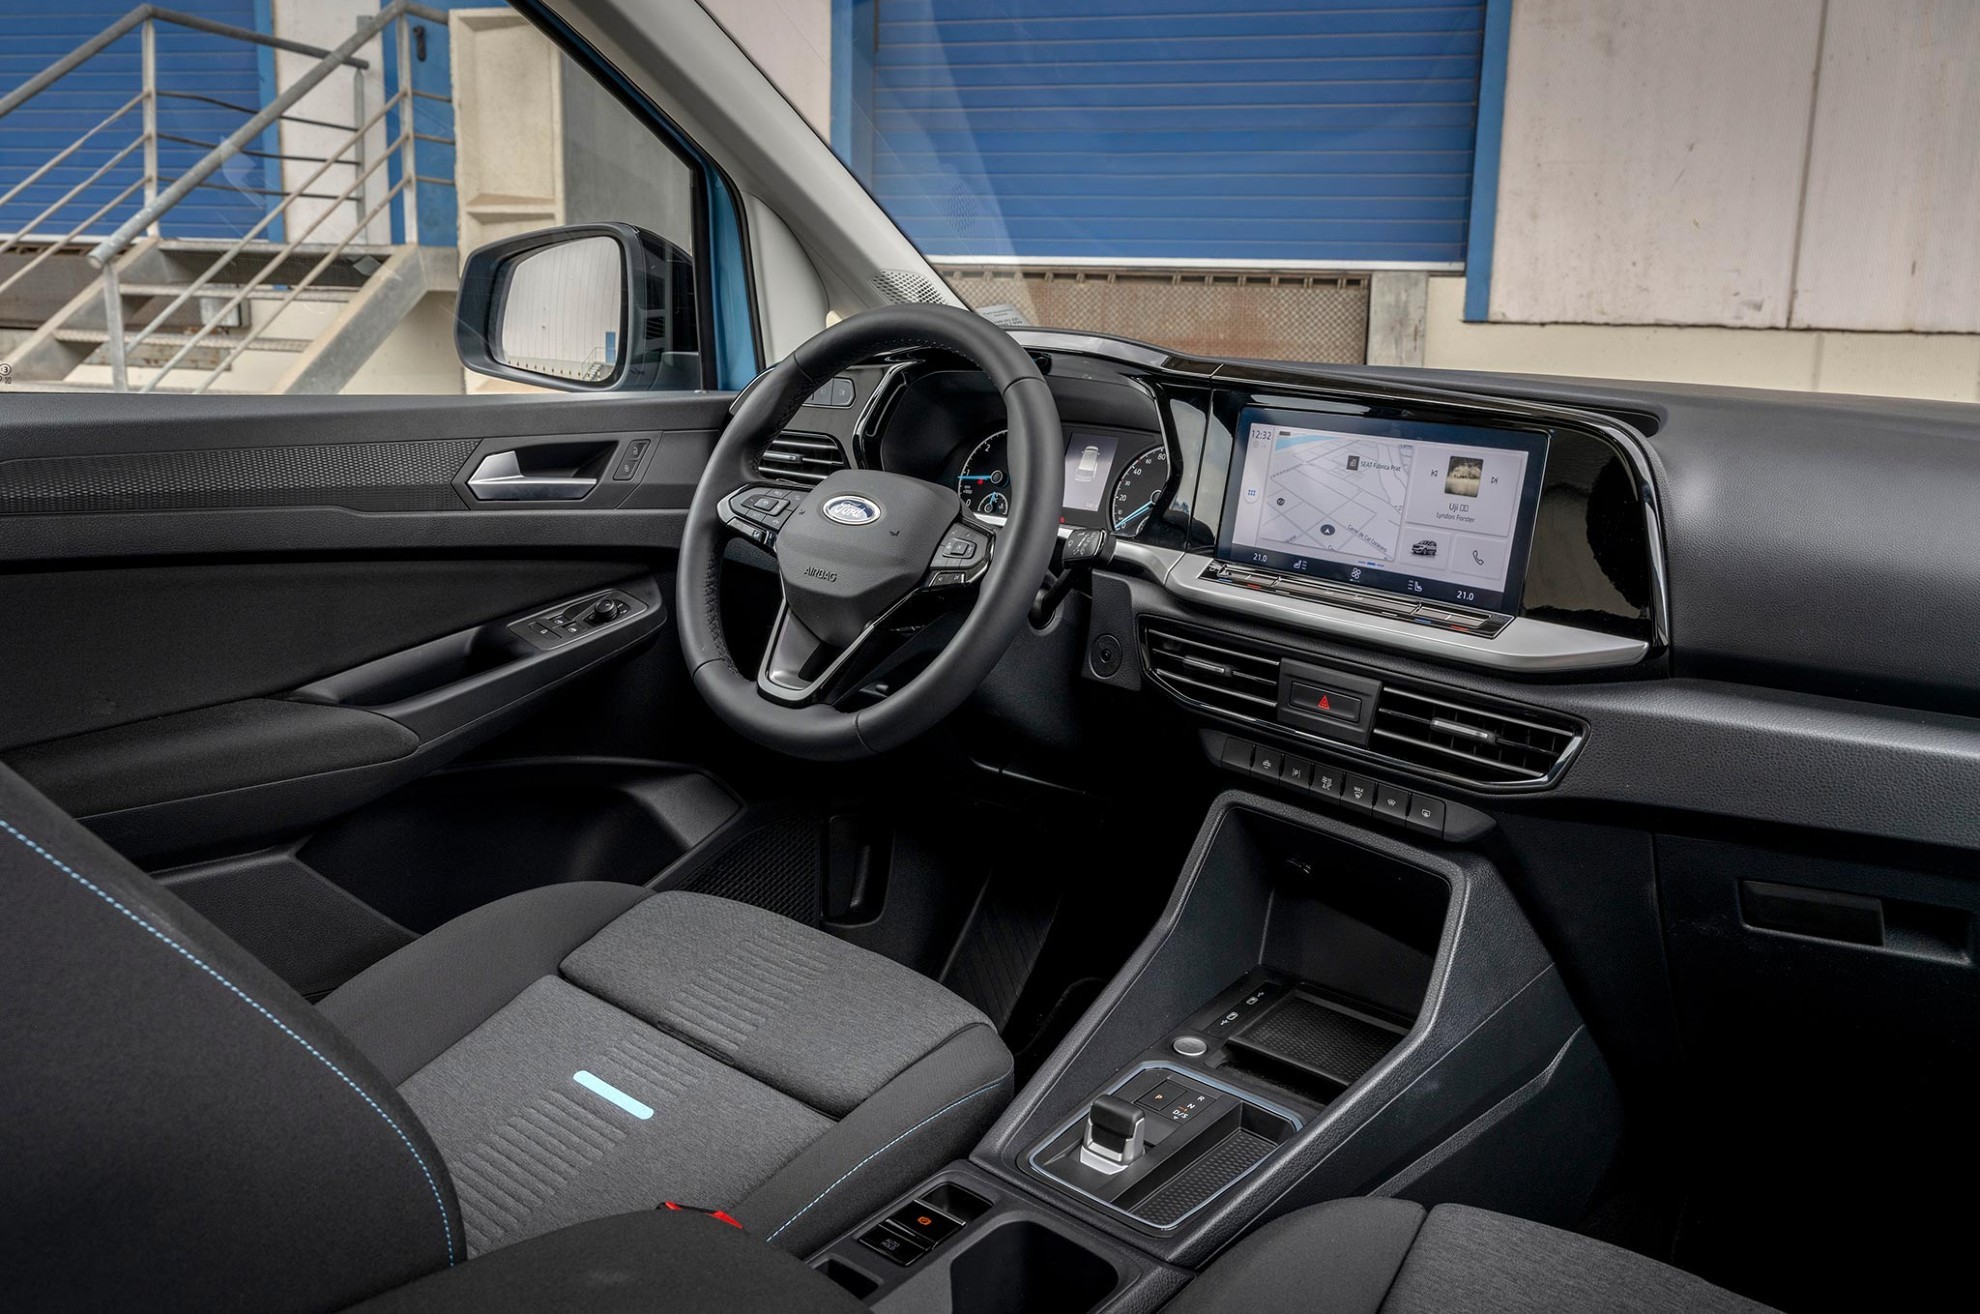 Ford Tourneo Connect - furgoneta - vehiculo comercial ligero - VW Caddy - primer contacto